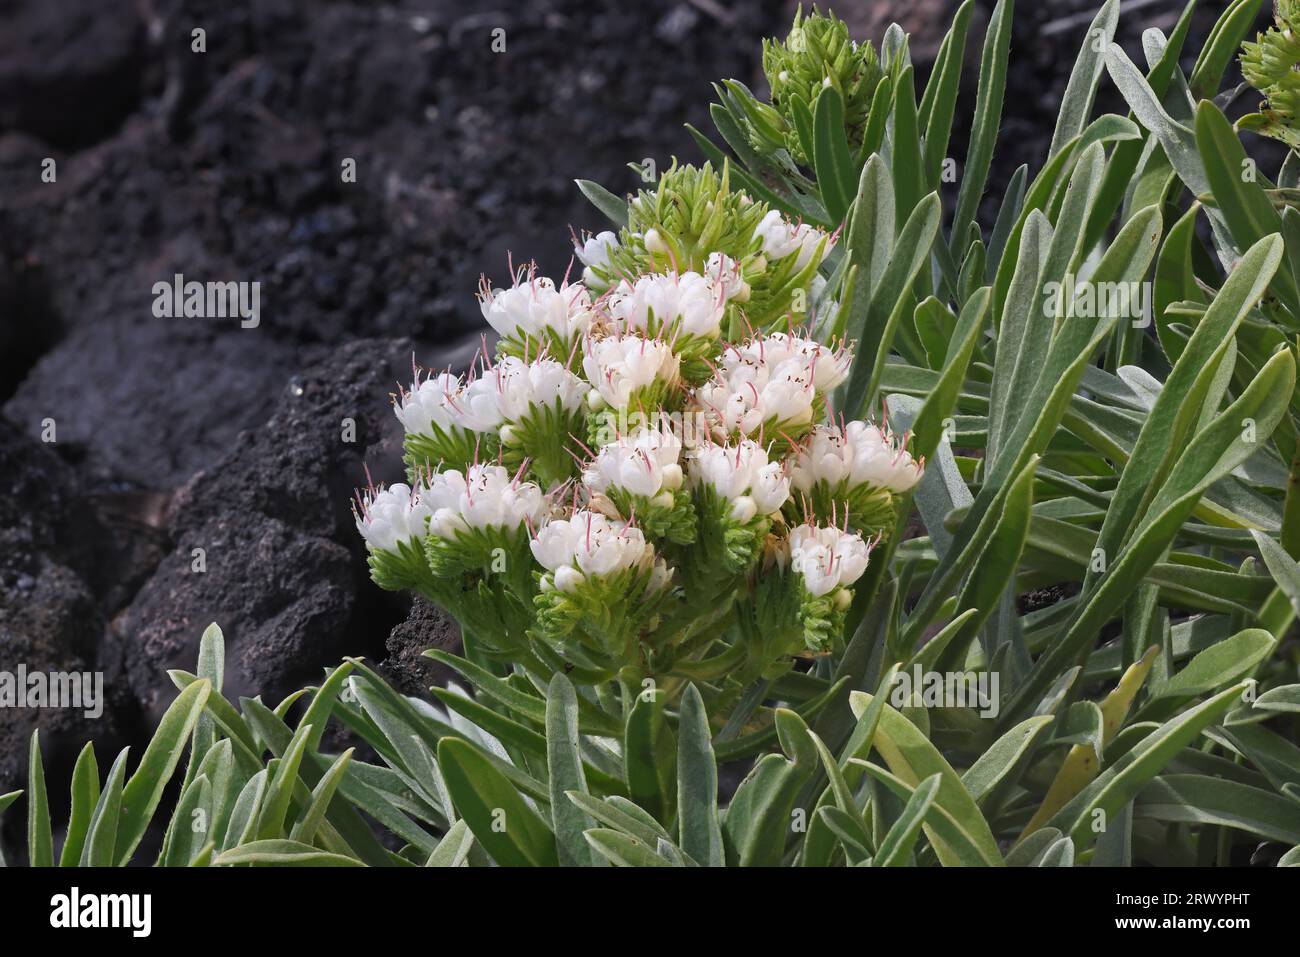 Arrebol (Echium brevirame), endémique à la Palma, îles Canaries, la Palma Banque D'Images